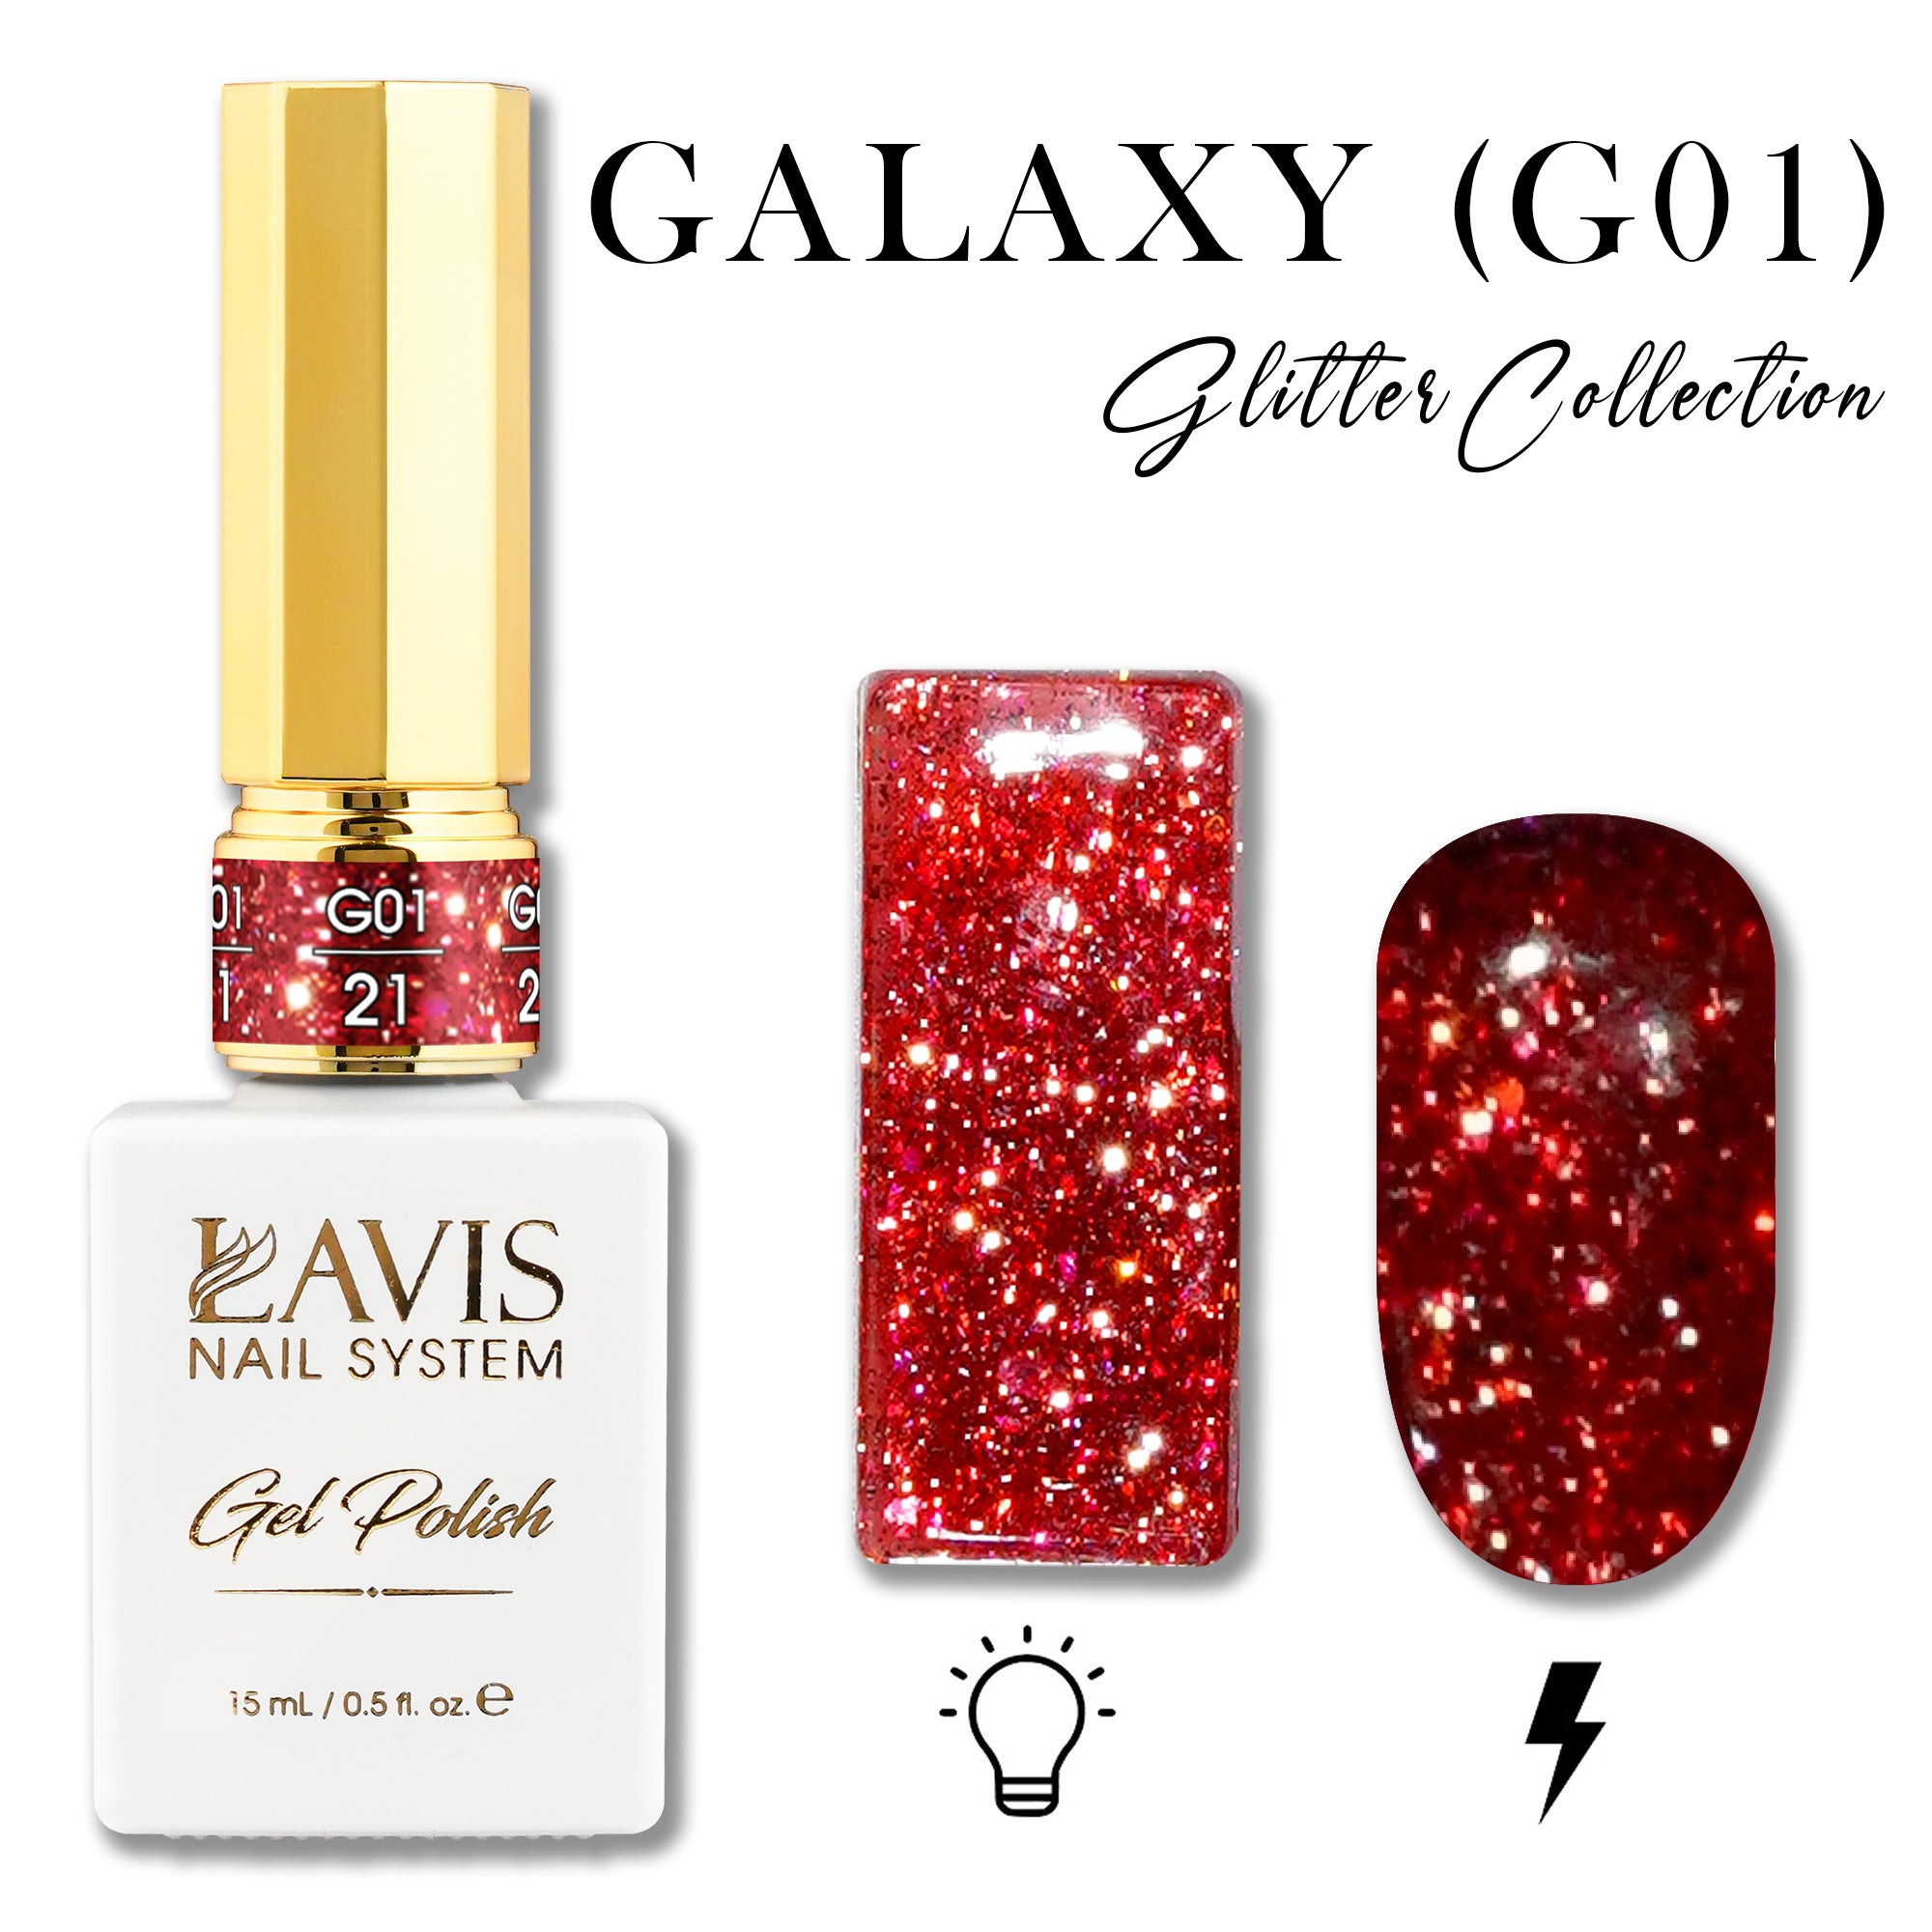 LAVIS Glitter G01 - 21 - Gel Polish 0.5 oz - Galaxy Collection